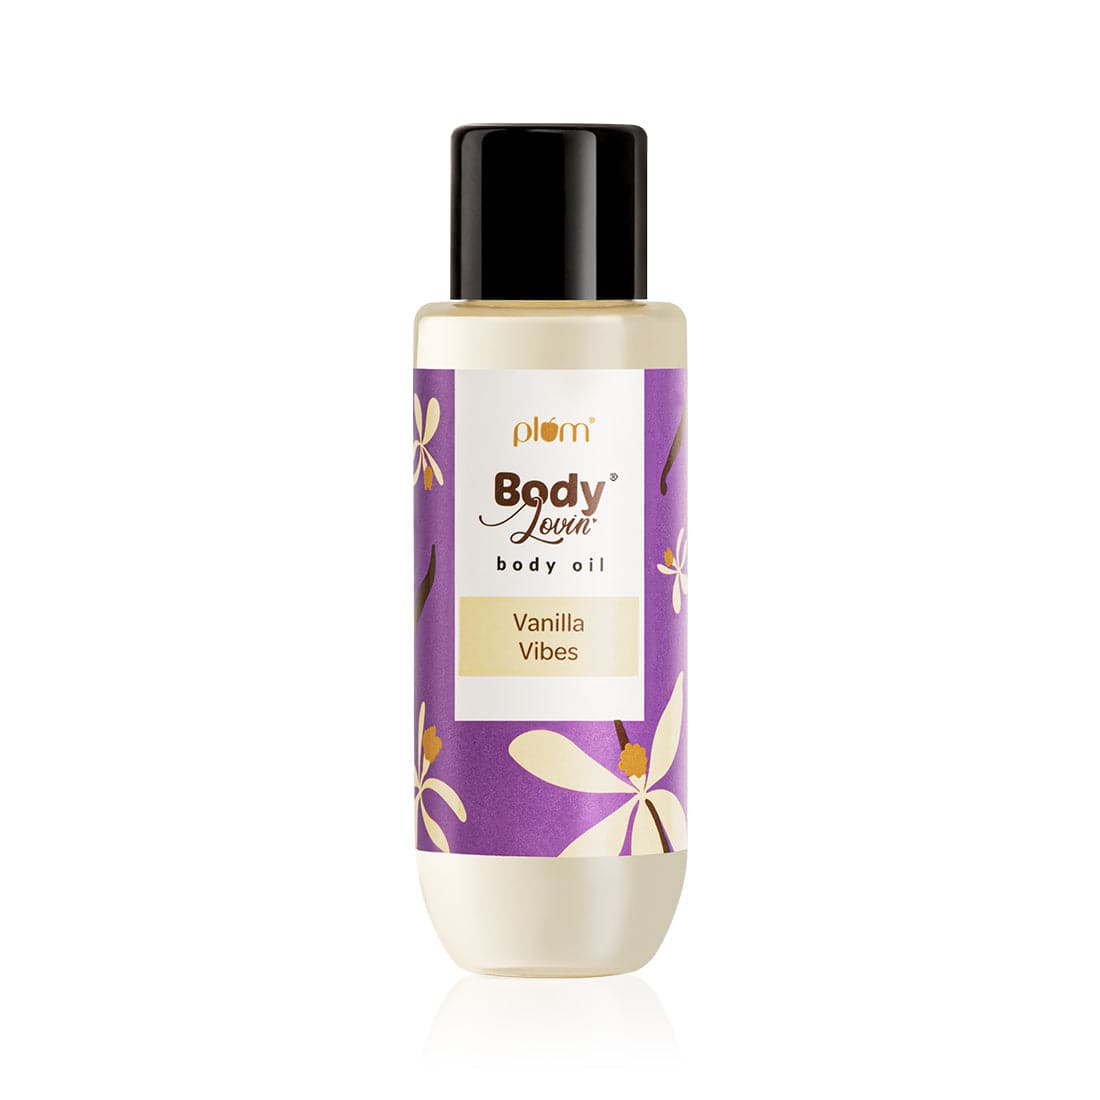 Plum BodyLovin Vanilla Vibes Body Oil (20 ml) for Normal to Dry Skin